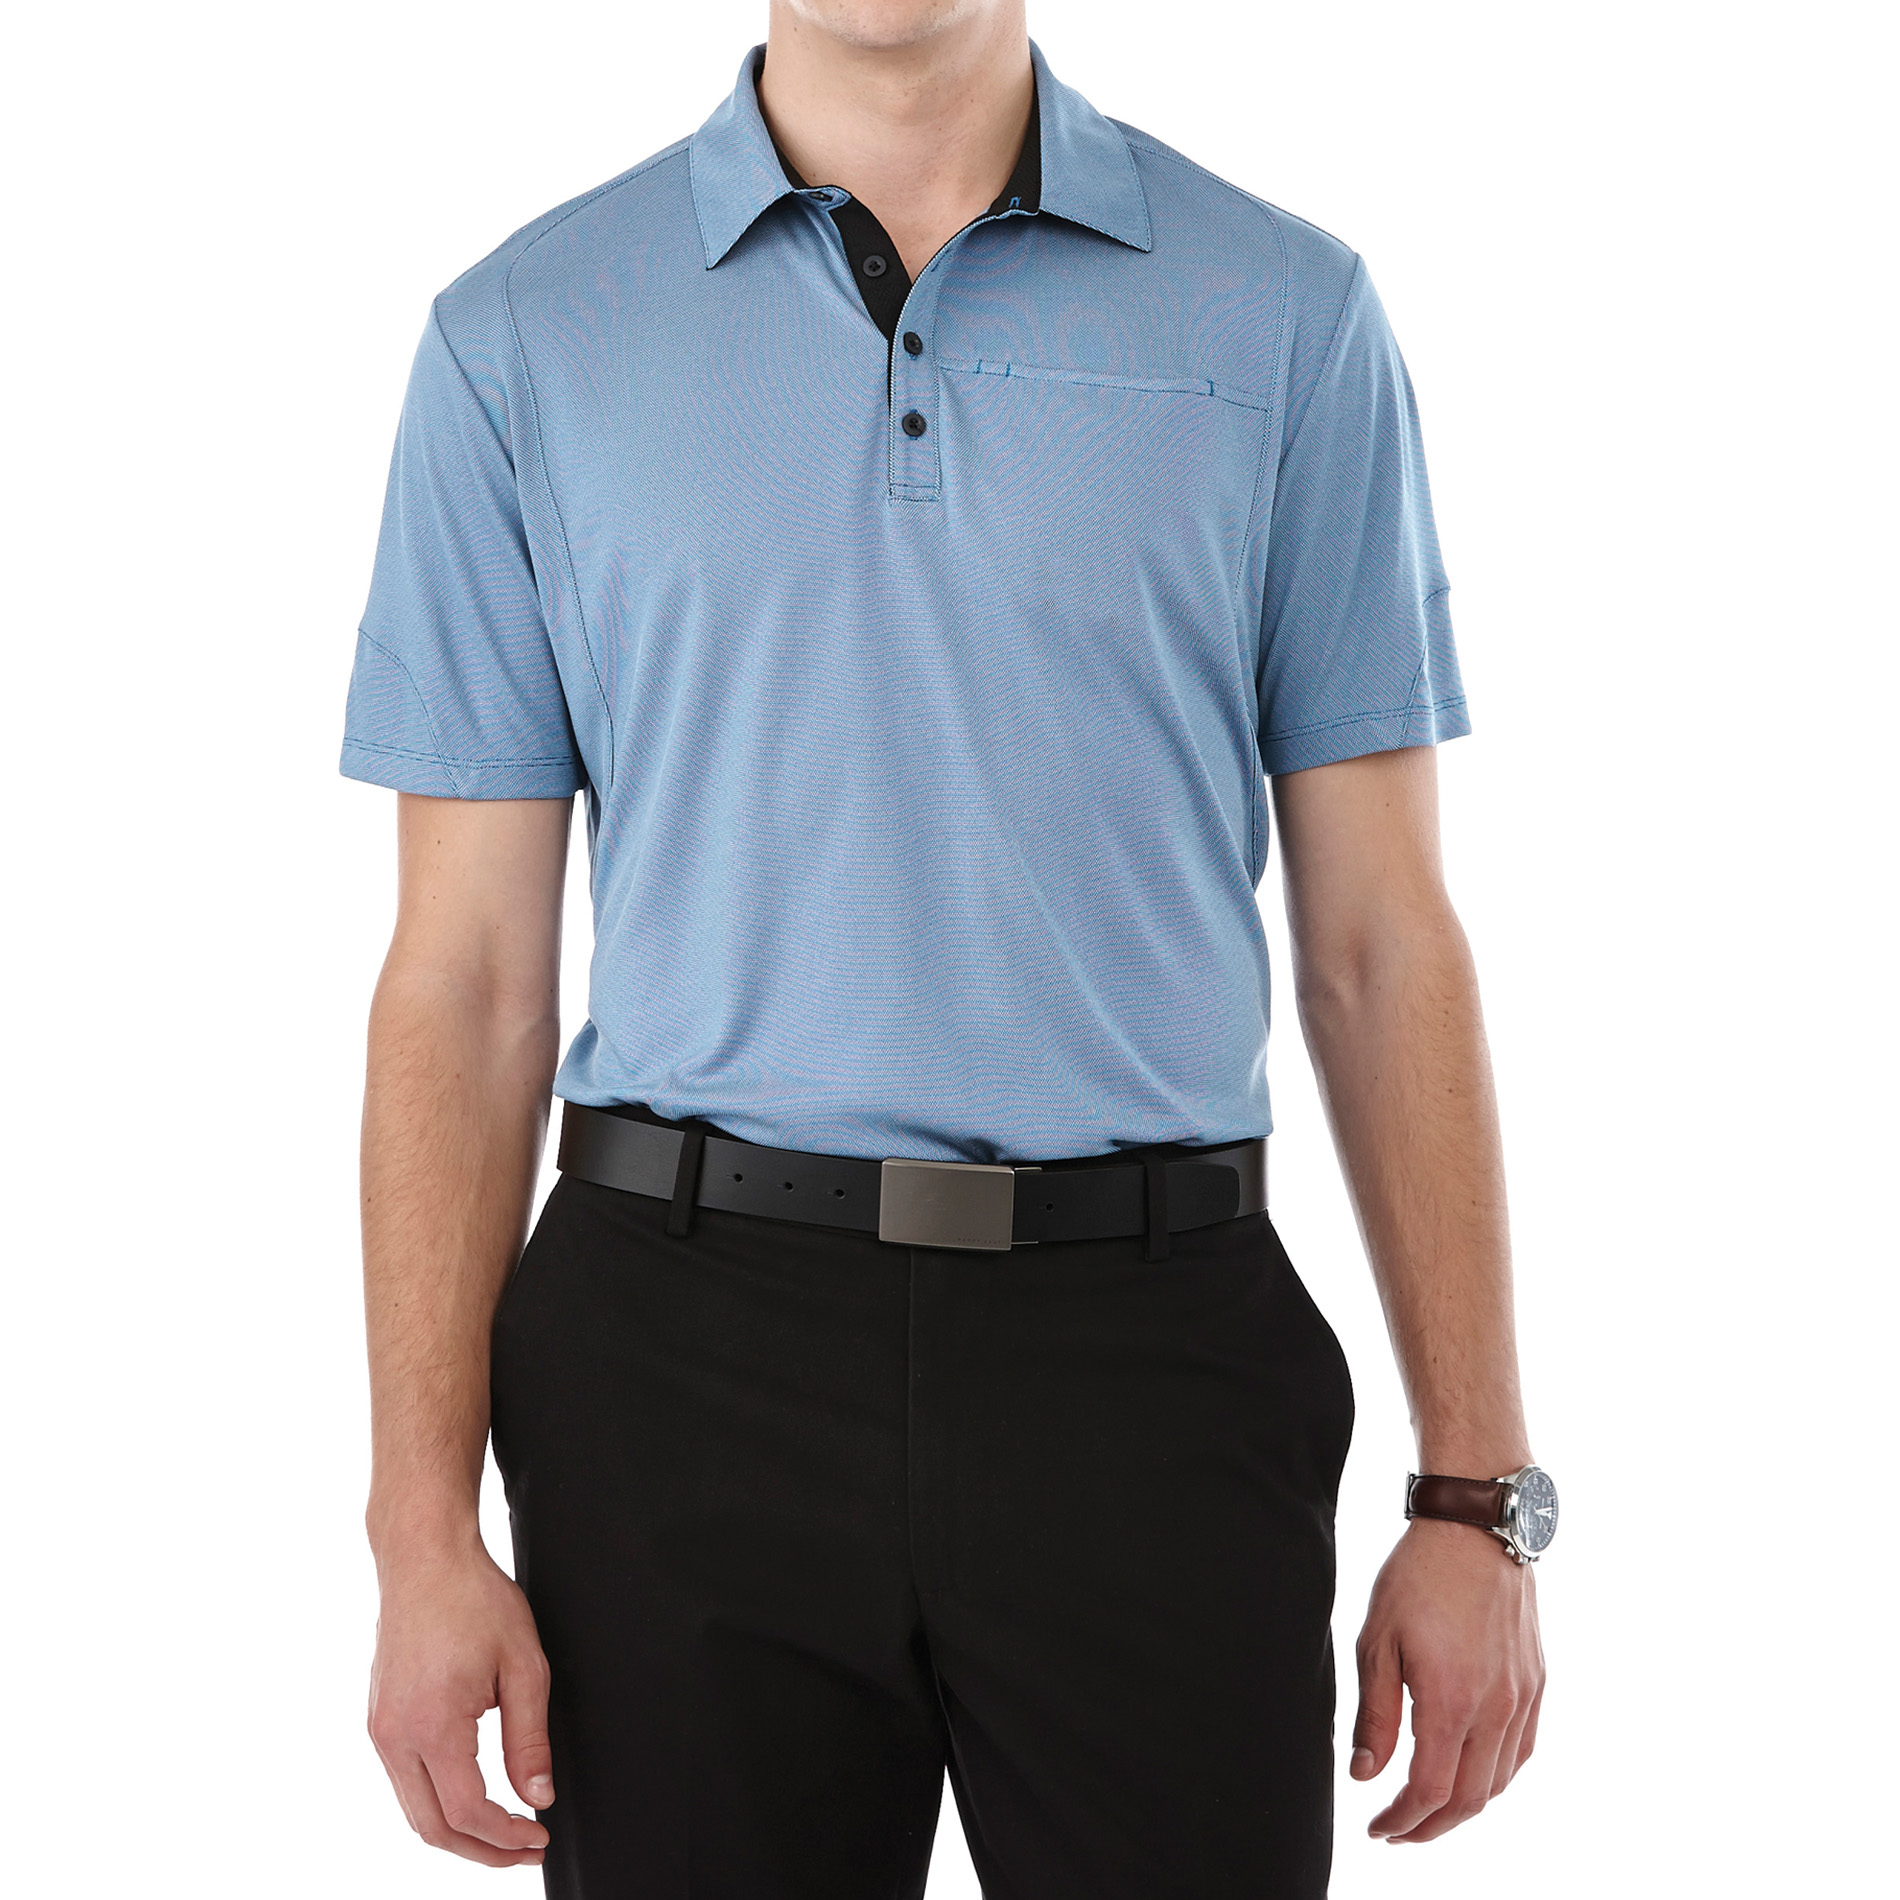 Trimark TM16509 - Men's TORRES Short Sleeve Polo